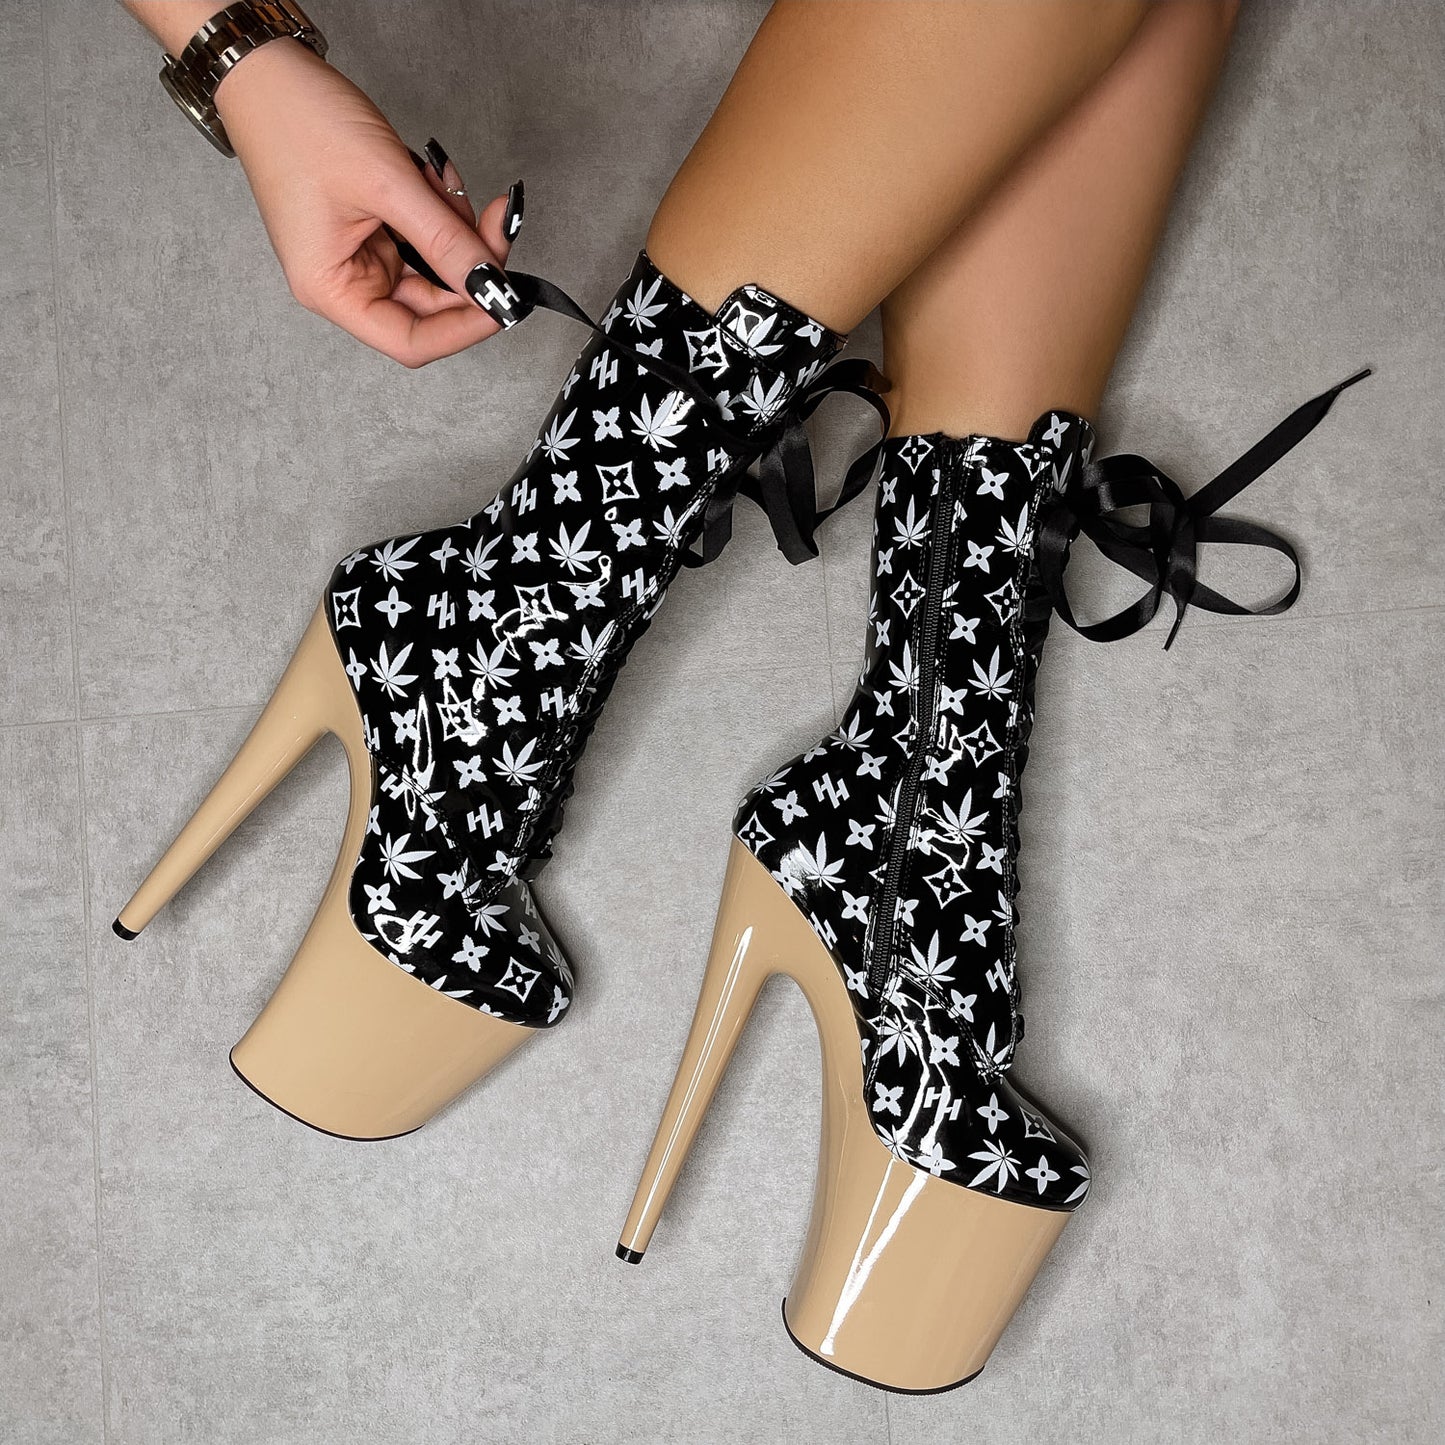 Branded Boot - Black/Sand - 8 INCH, stripper shoe, stripper heel, pole heel, not a pleaser, platform, dancer, pole dance, floor work